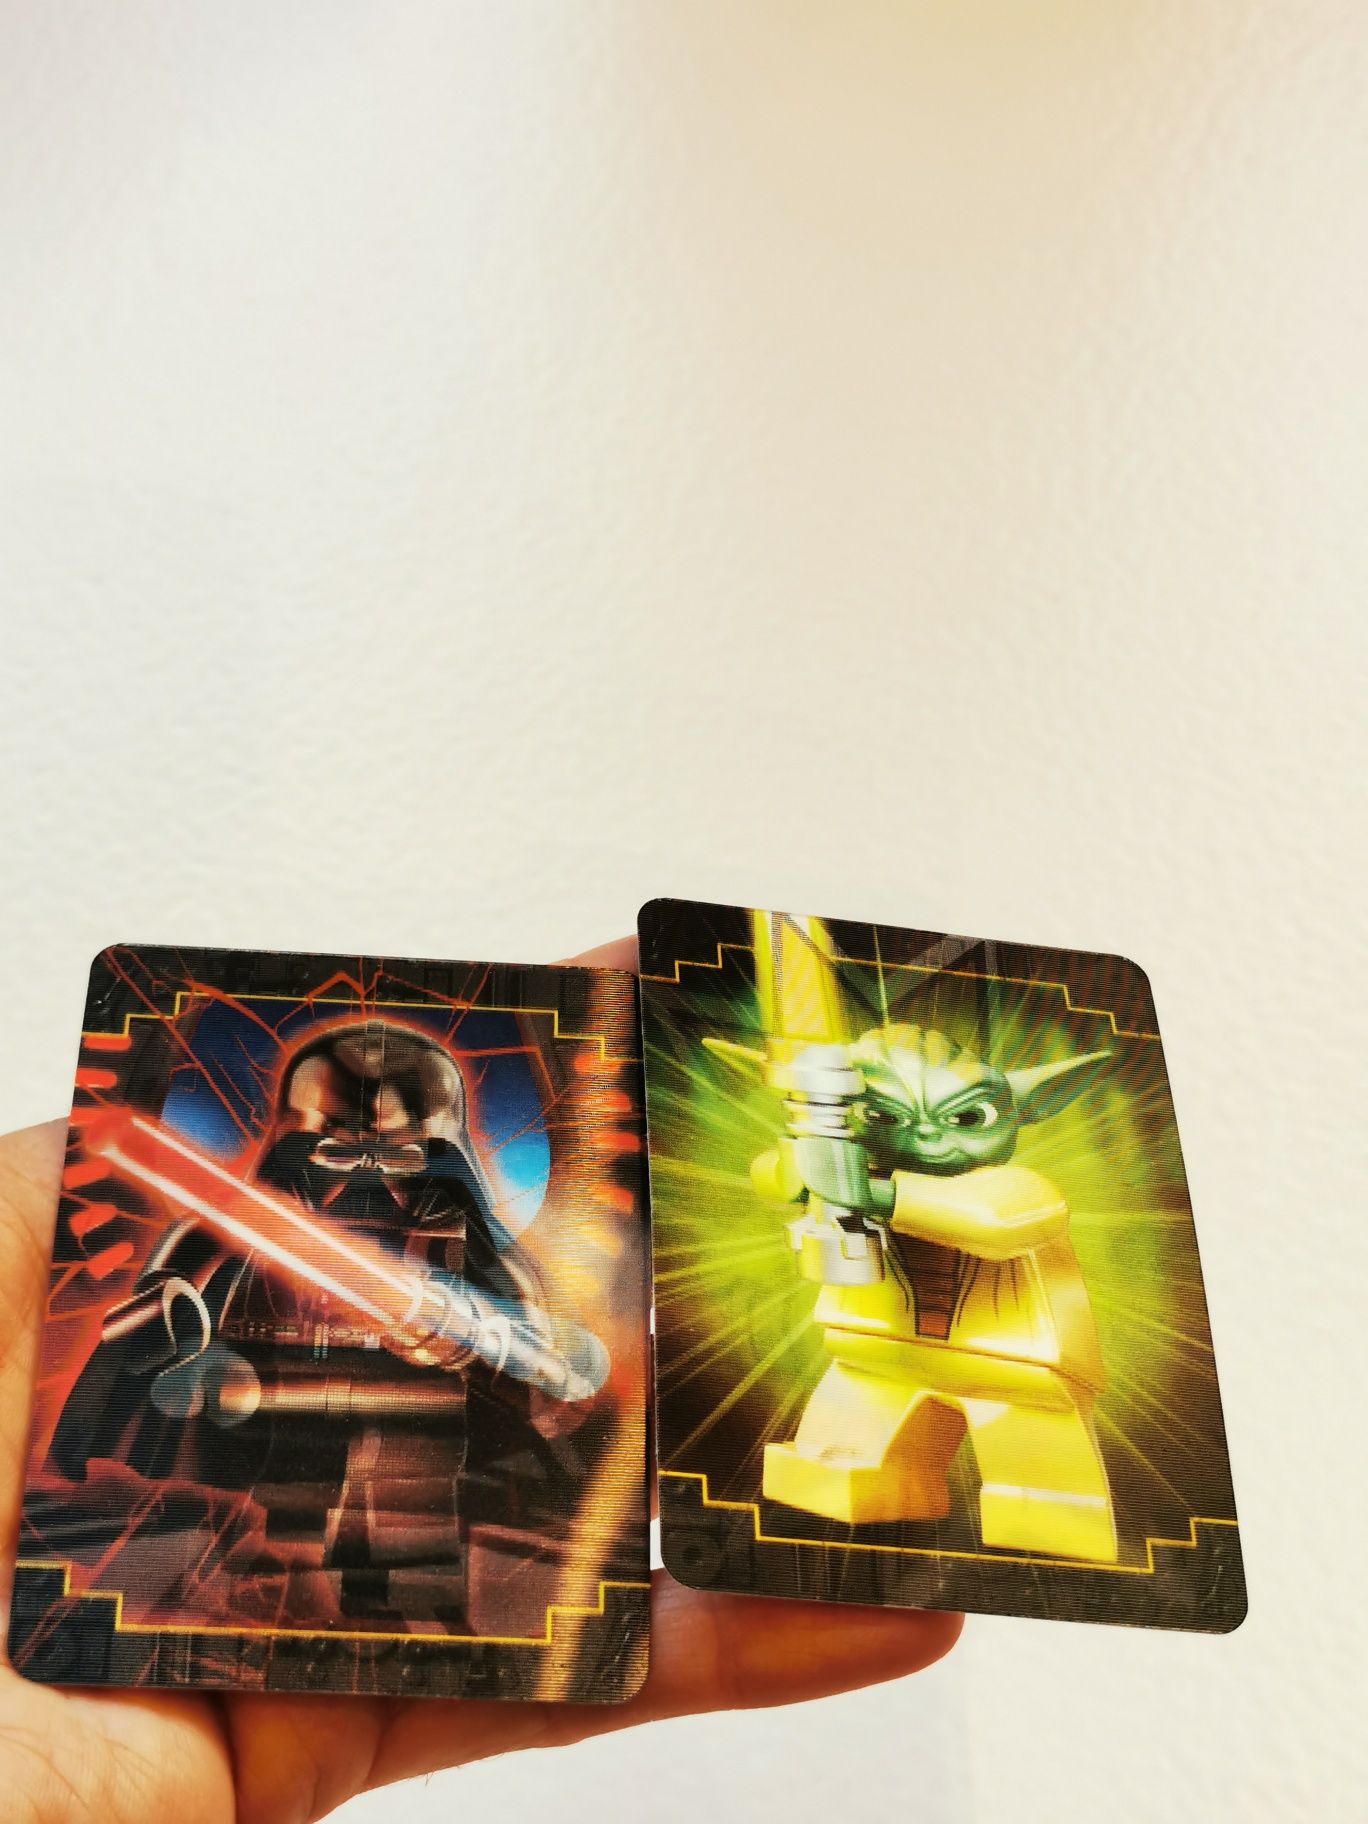 Album Lego Star Wars TCG kompletny + dodatki